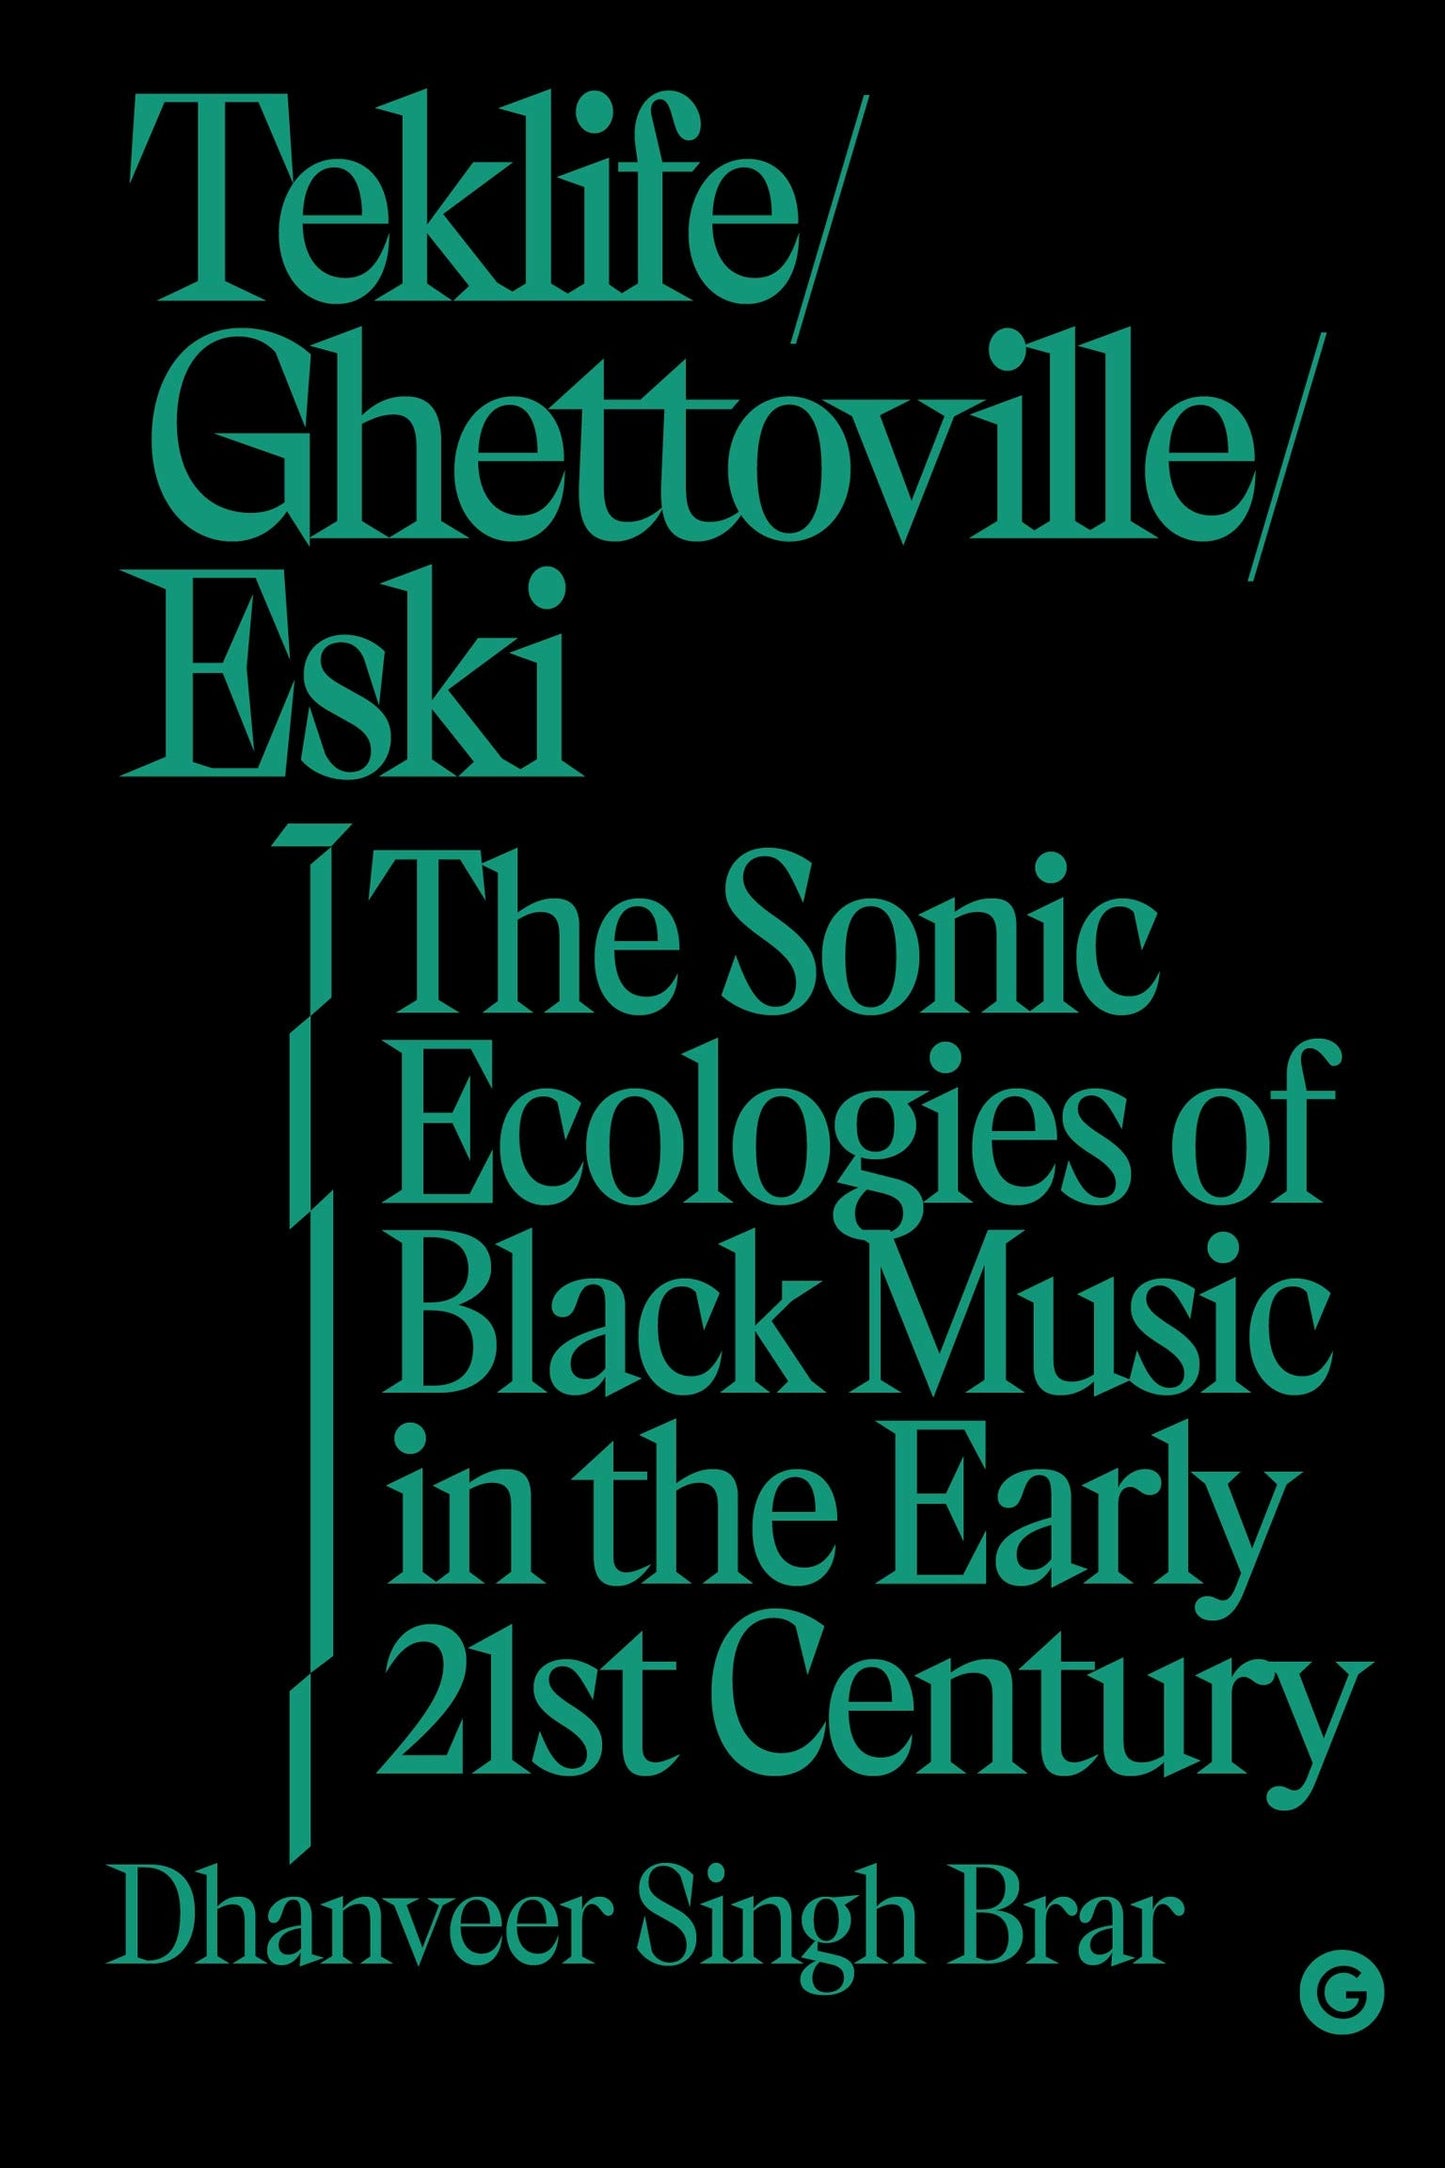 Teklife, Ghettoville, Eski // The Sonic Ecologies of Black Music in the Early 21st Century